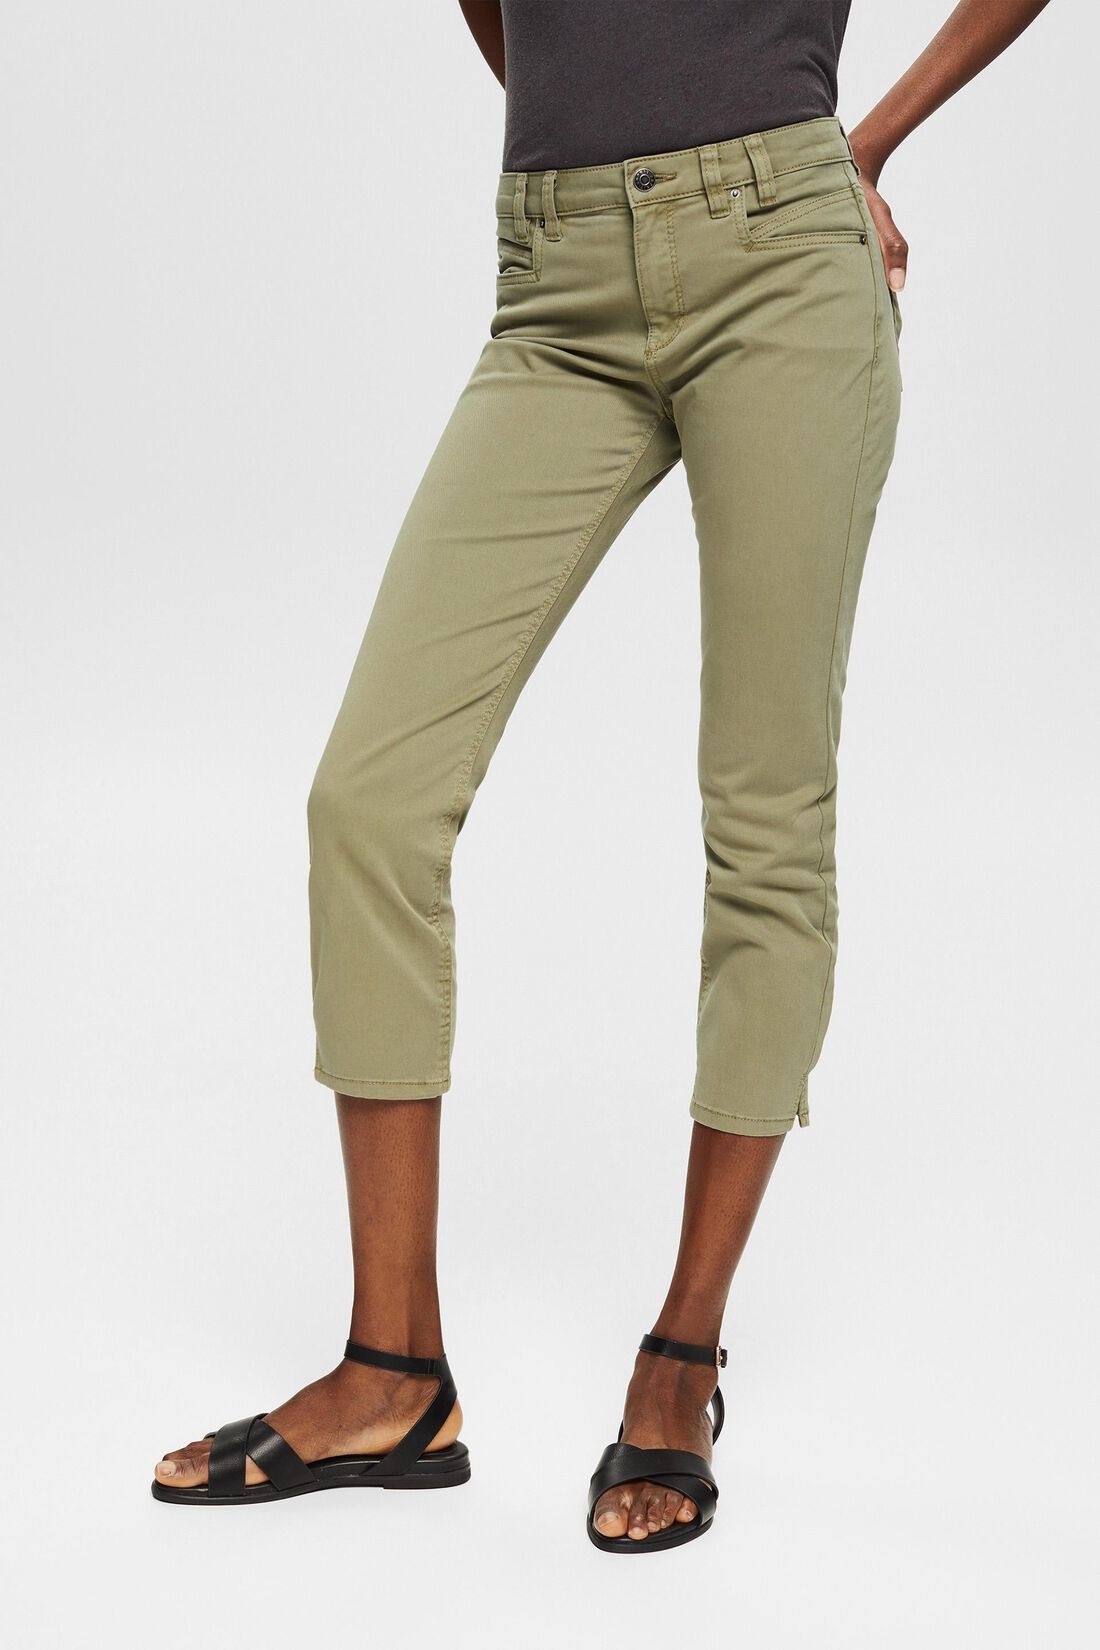 LTS Tall Womens Khaki Green Stretch Straight Leg Trousers | Long Tall Sally